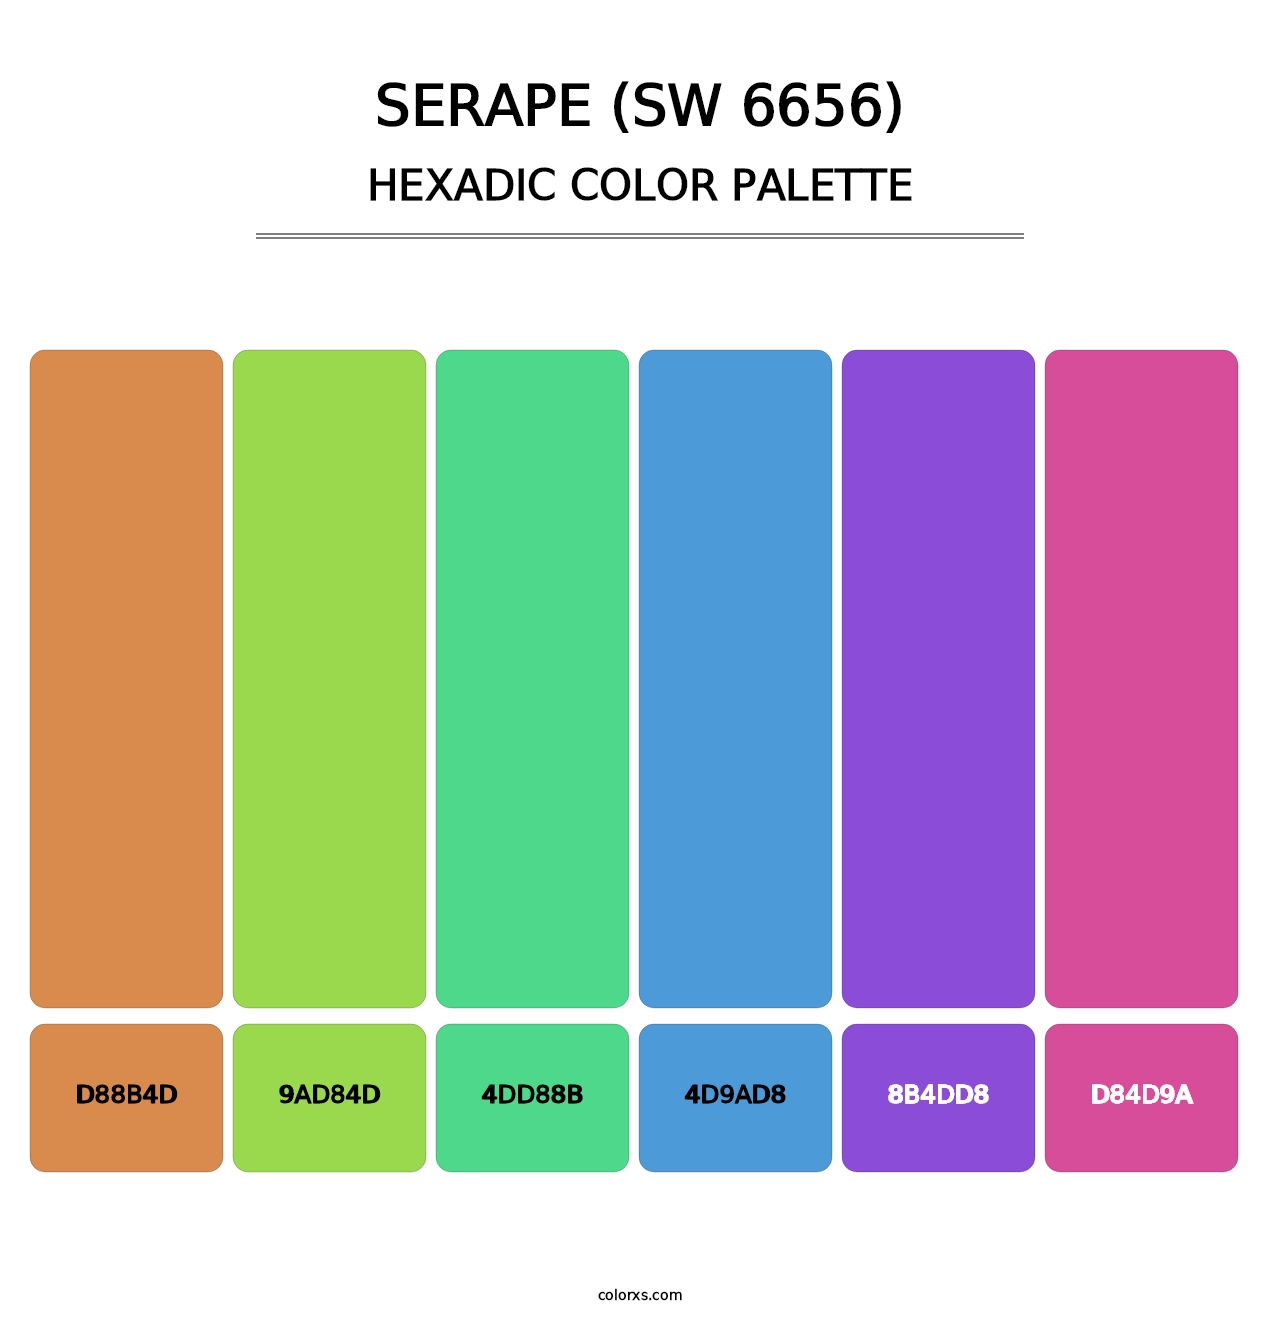 Serape (SW 6656) - Hexadic Color Palette